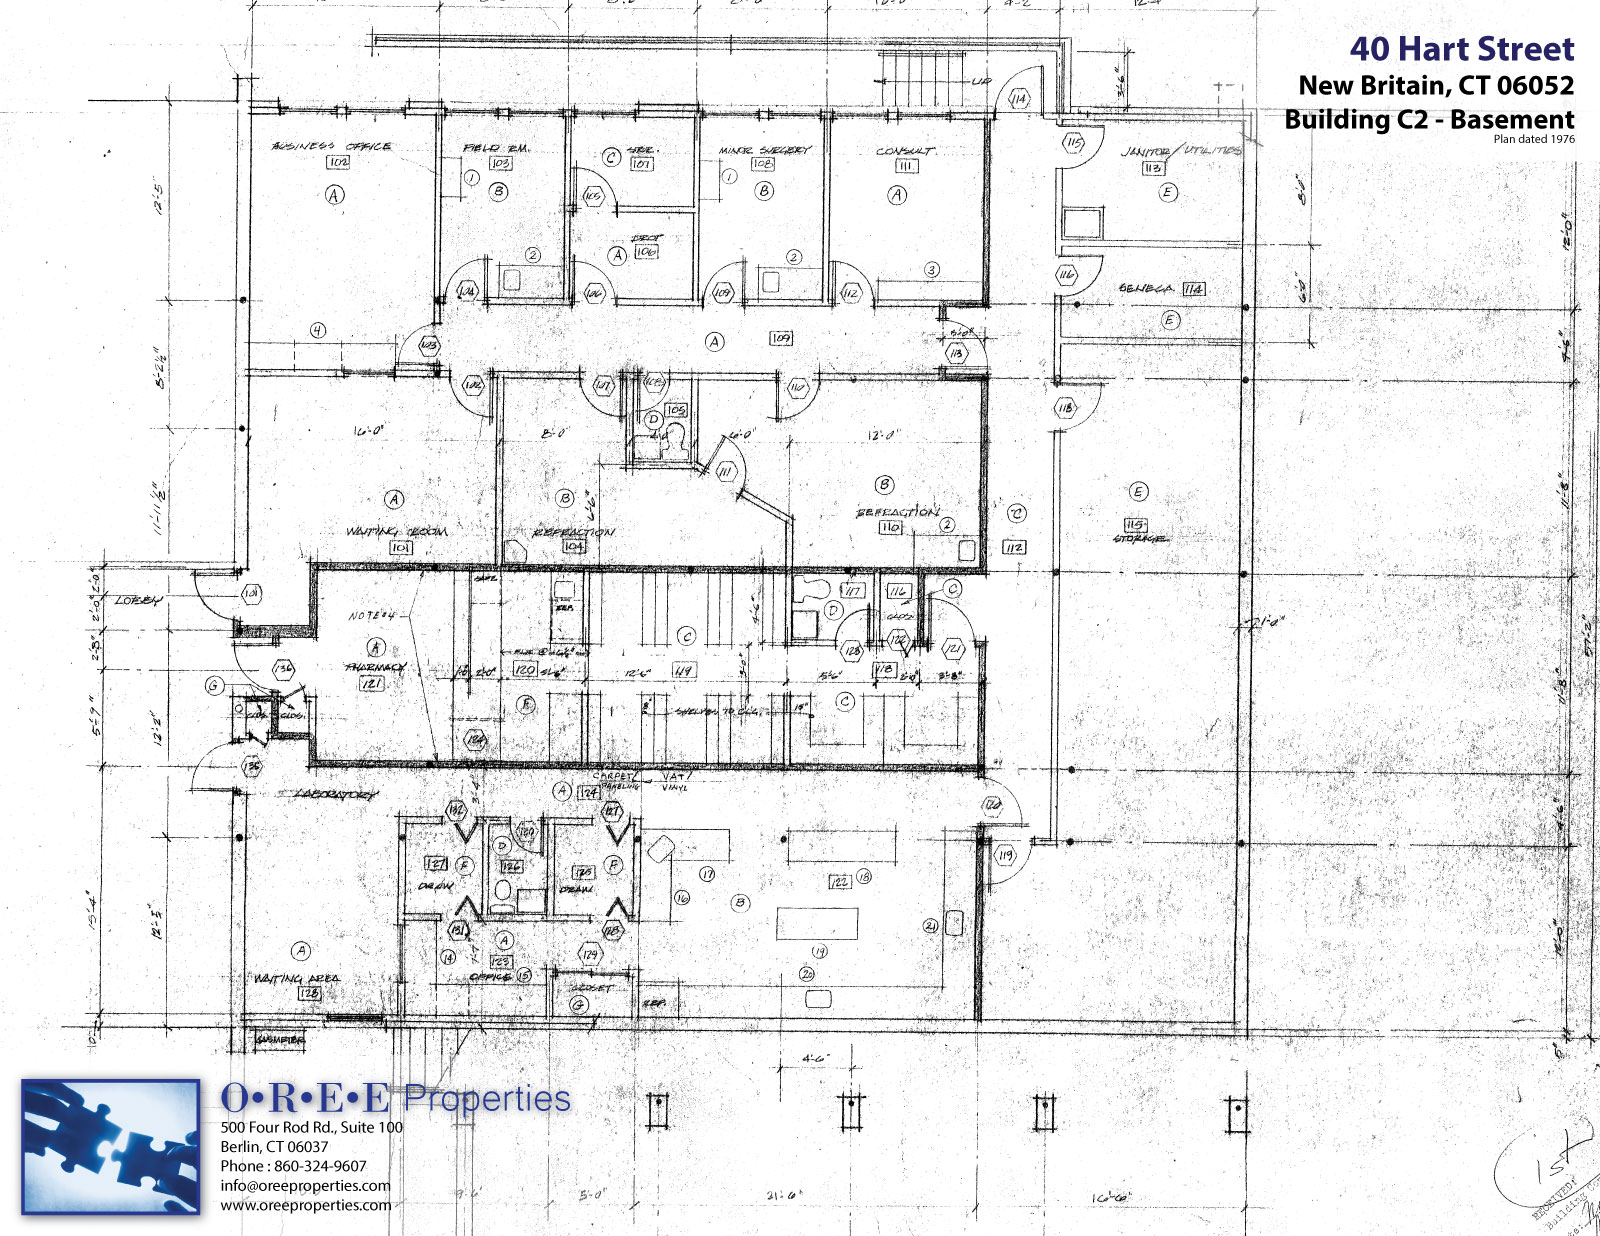 40 Hart St., New Britain, Building C2 - Lower Level Floor Plan